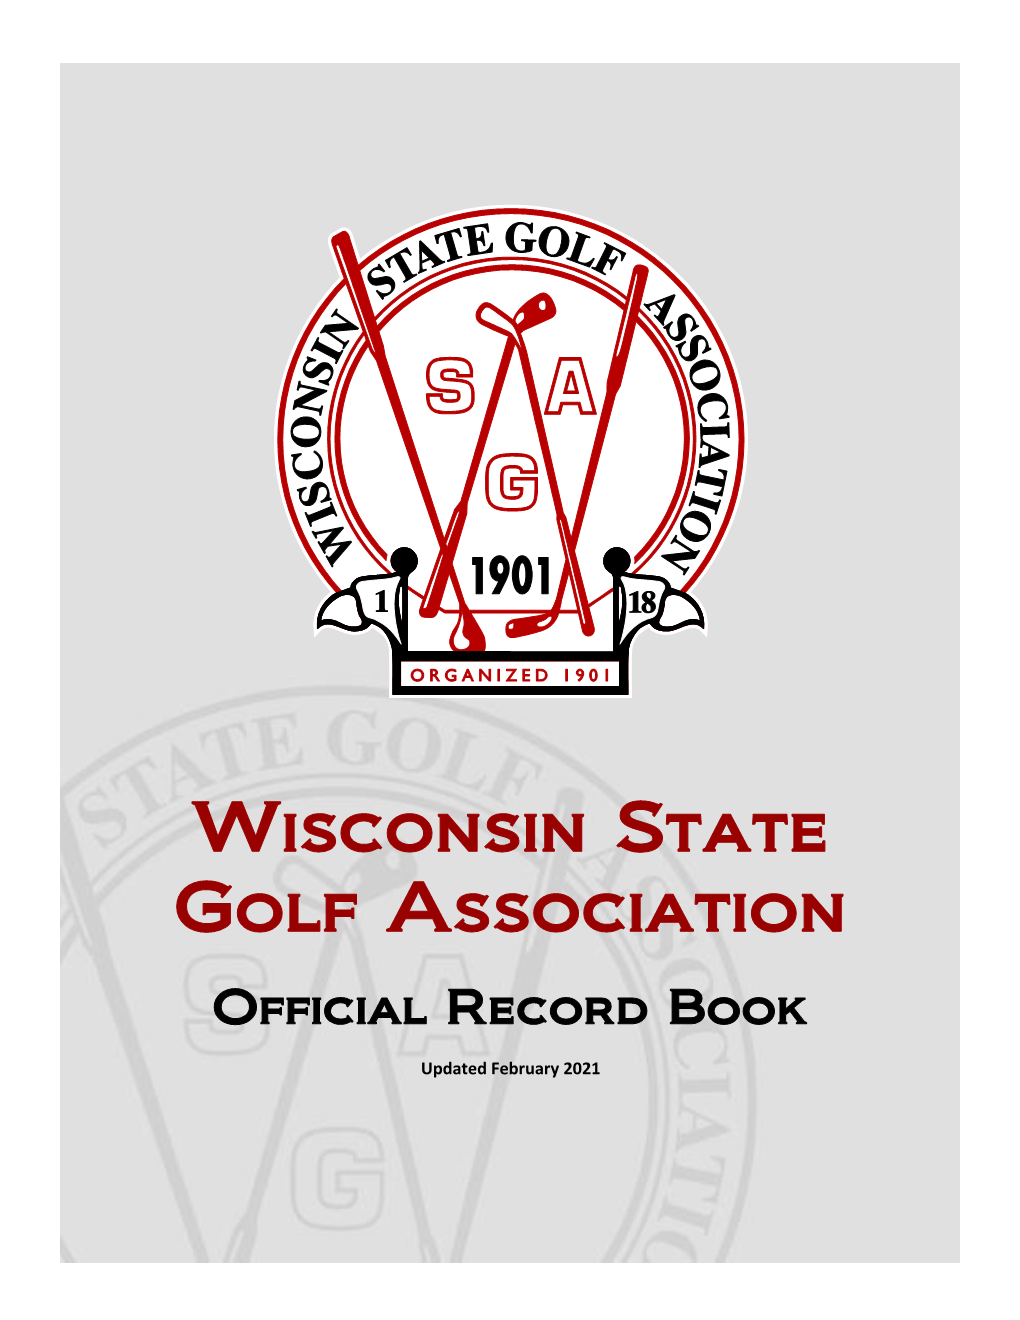 Wisconsin State Golf Association